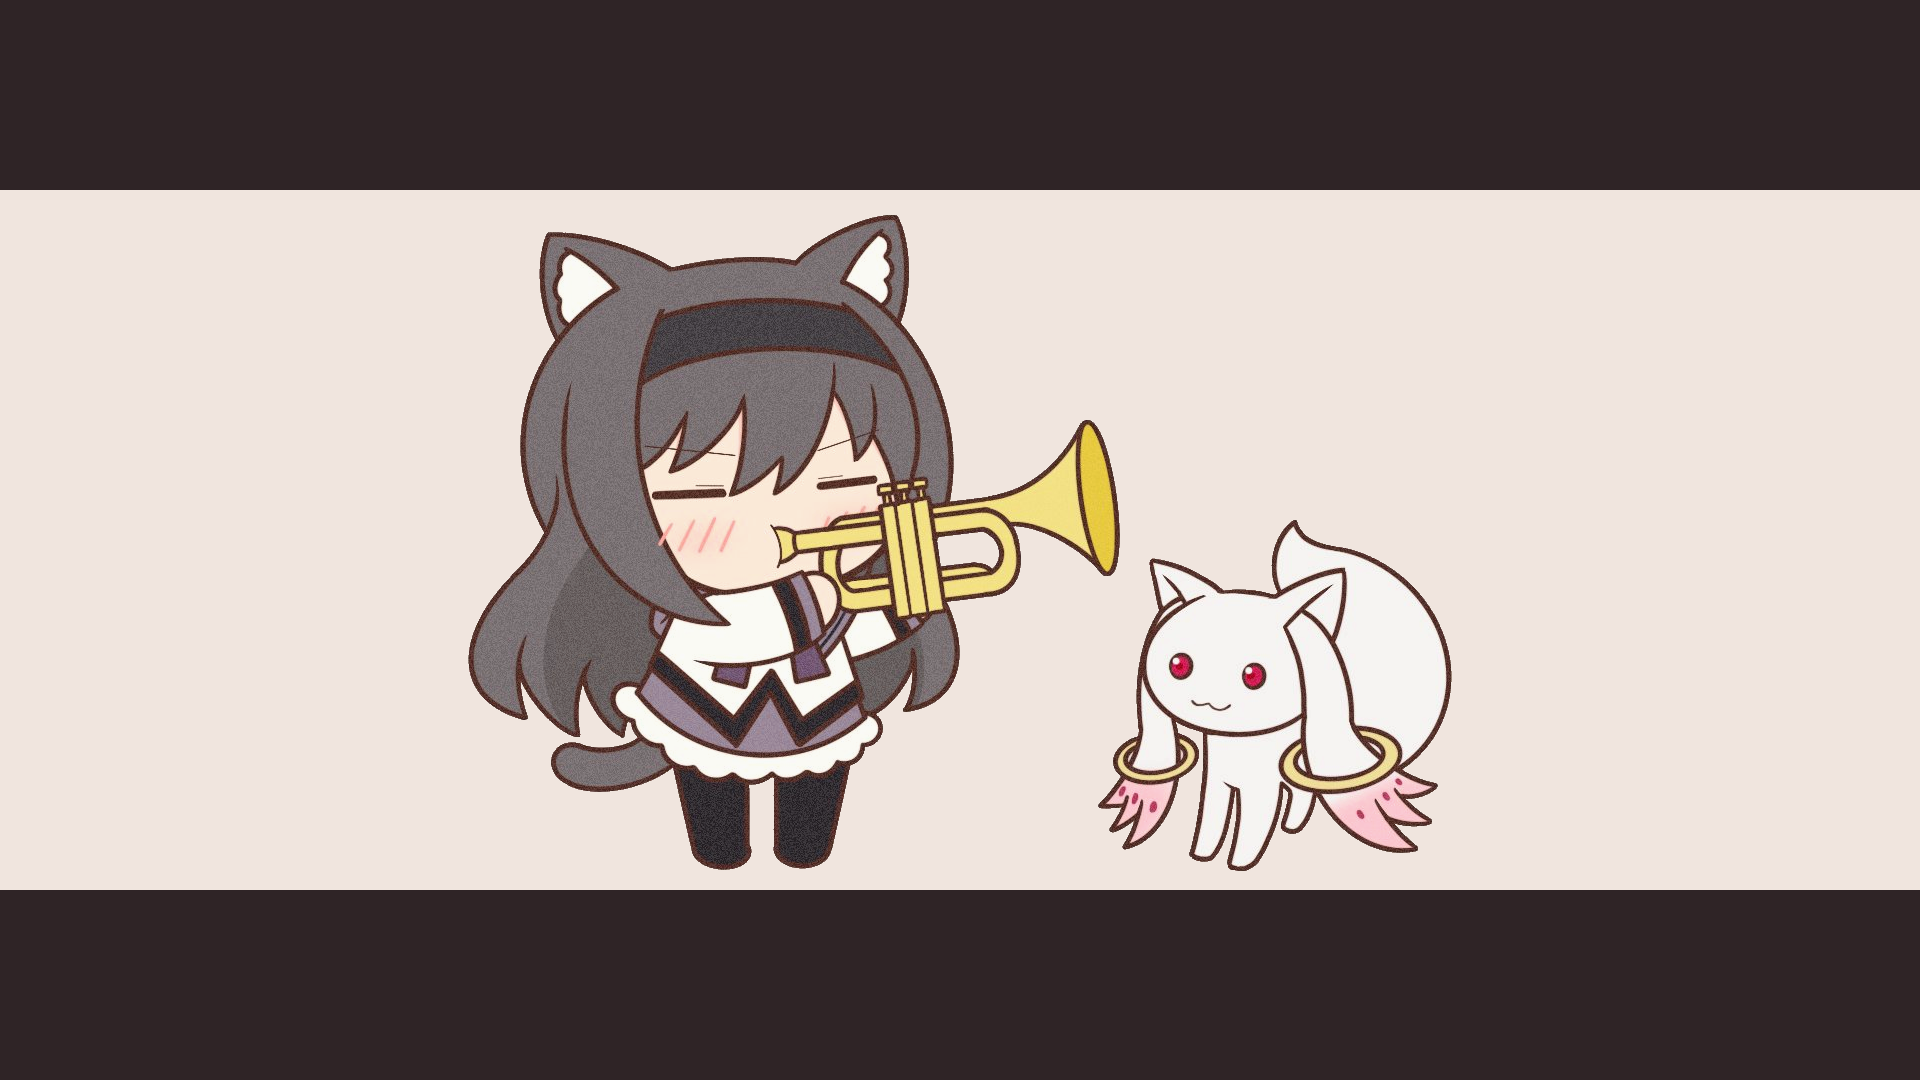 Anime Girls Anime Black Hair Dark Hair Trumpet Musical Instrument Animal Ears Headband Bangs Blunt B 1920x1080